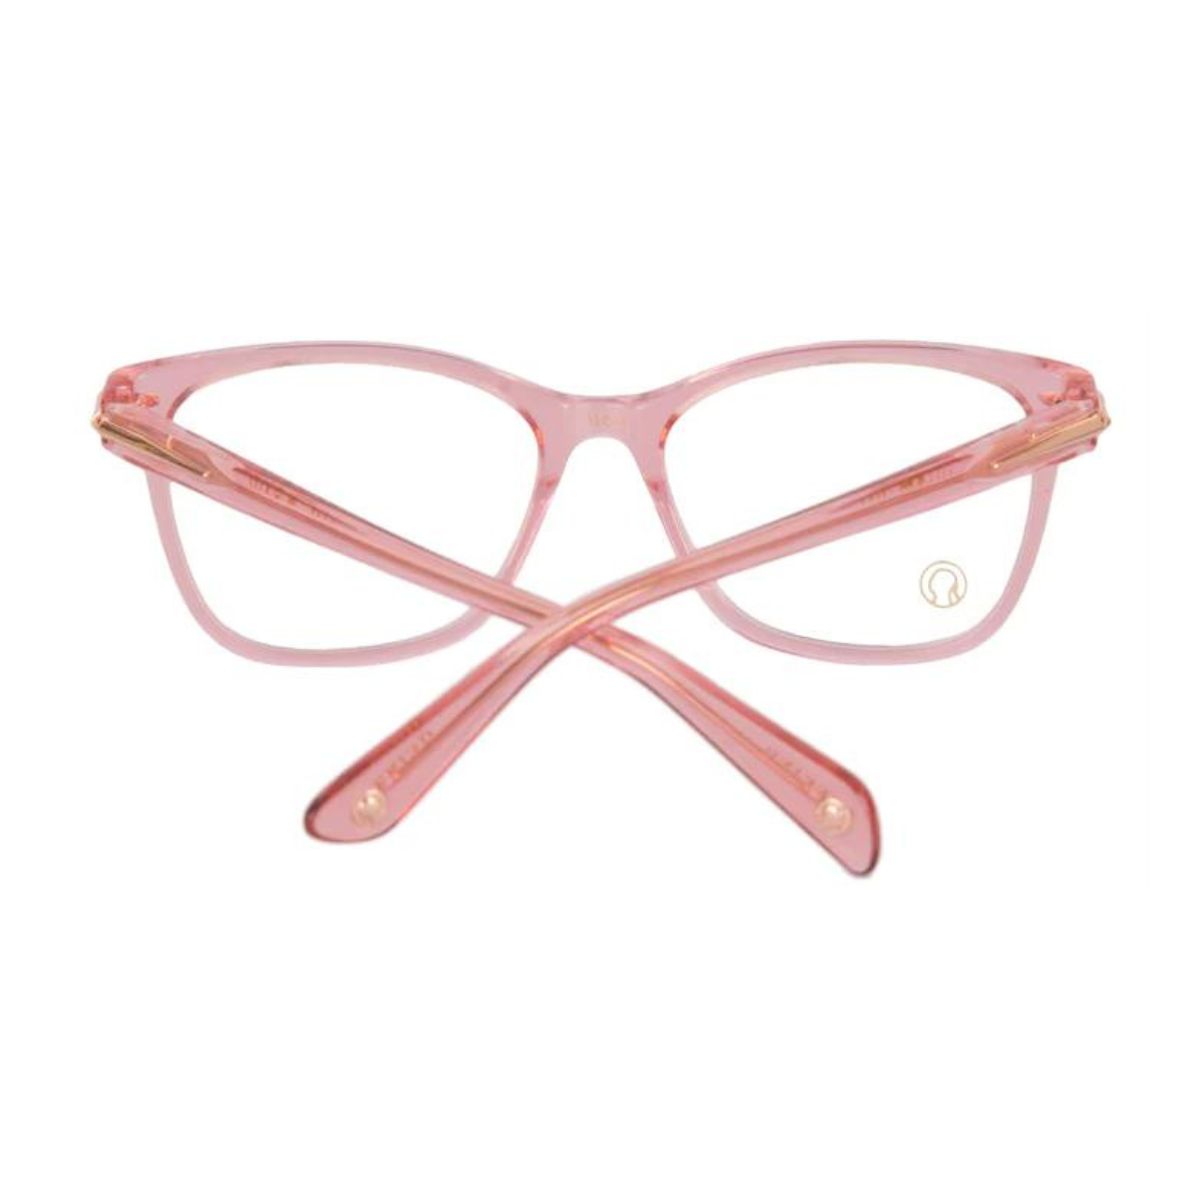 "stylish The Monk Florence C4 trendy eyewear frame for women's at optorium"